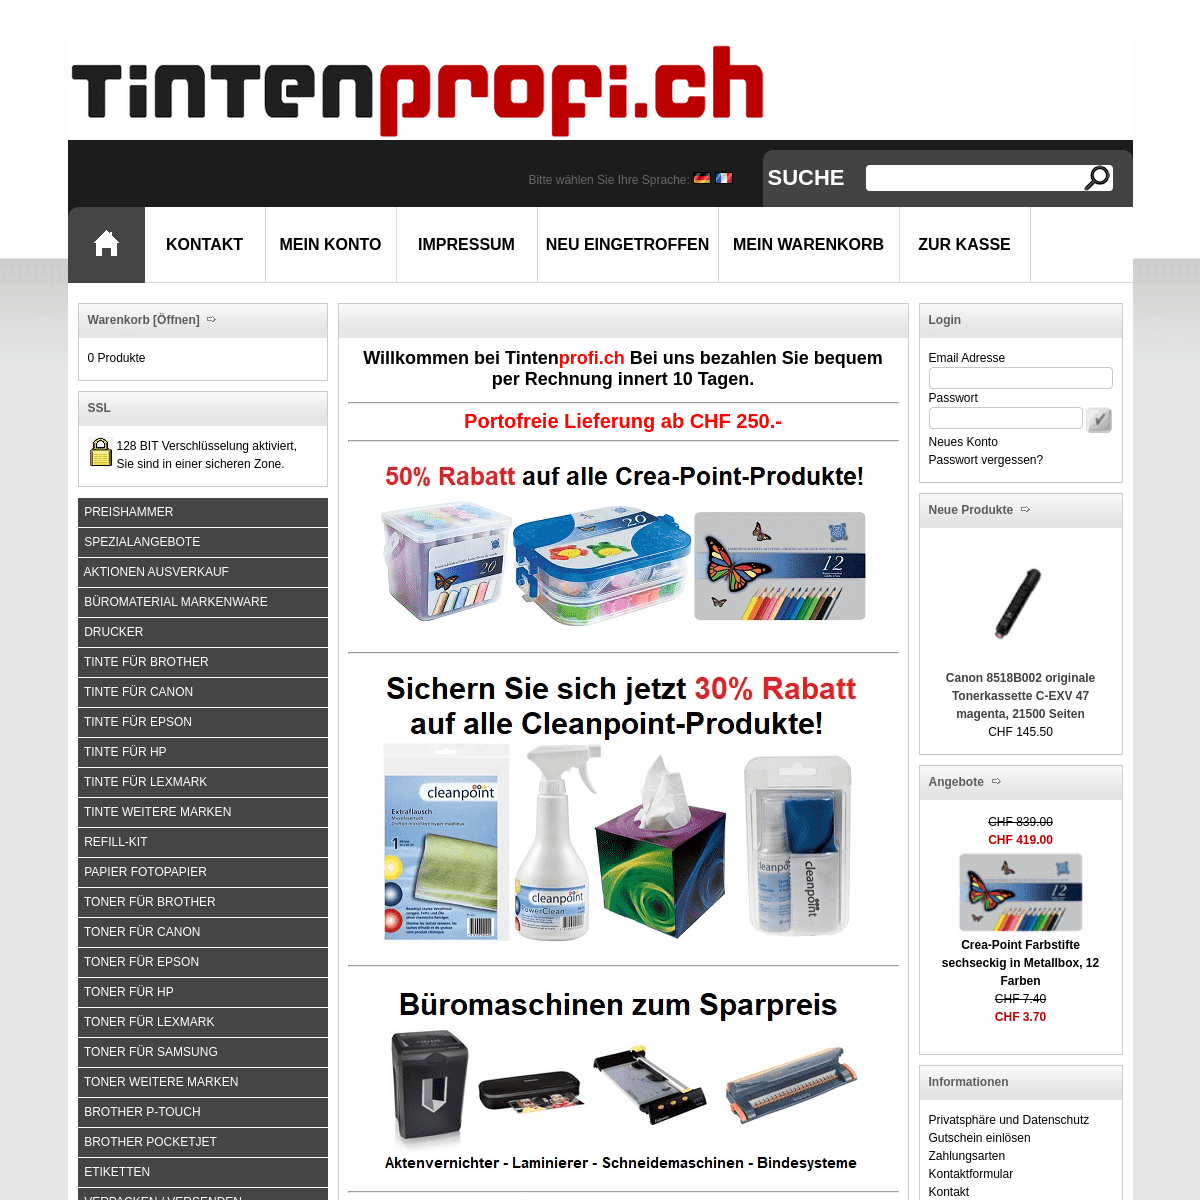 A complete backup of tintenprofi.ch